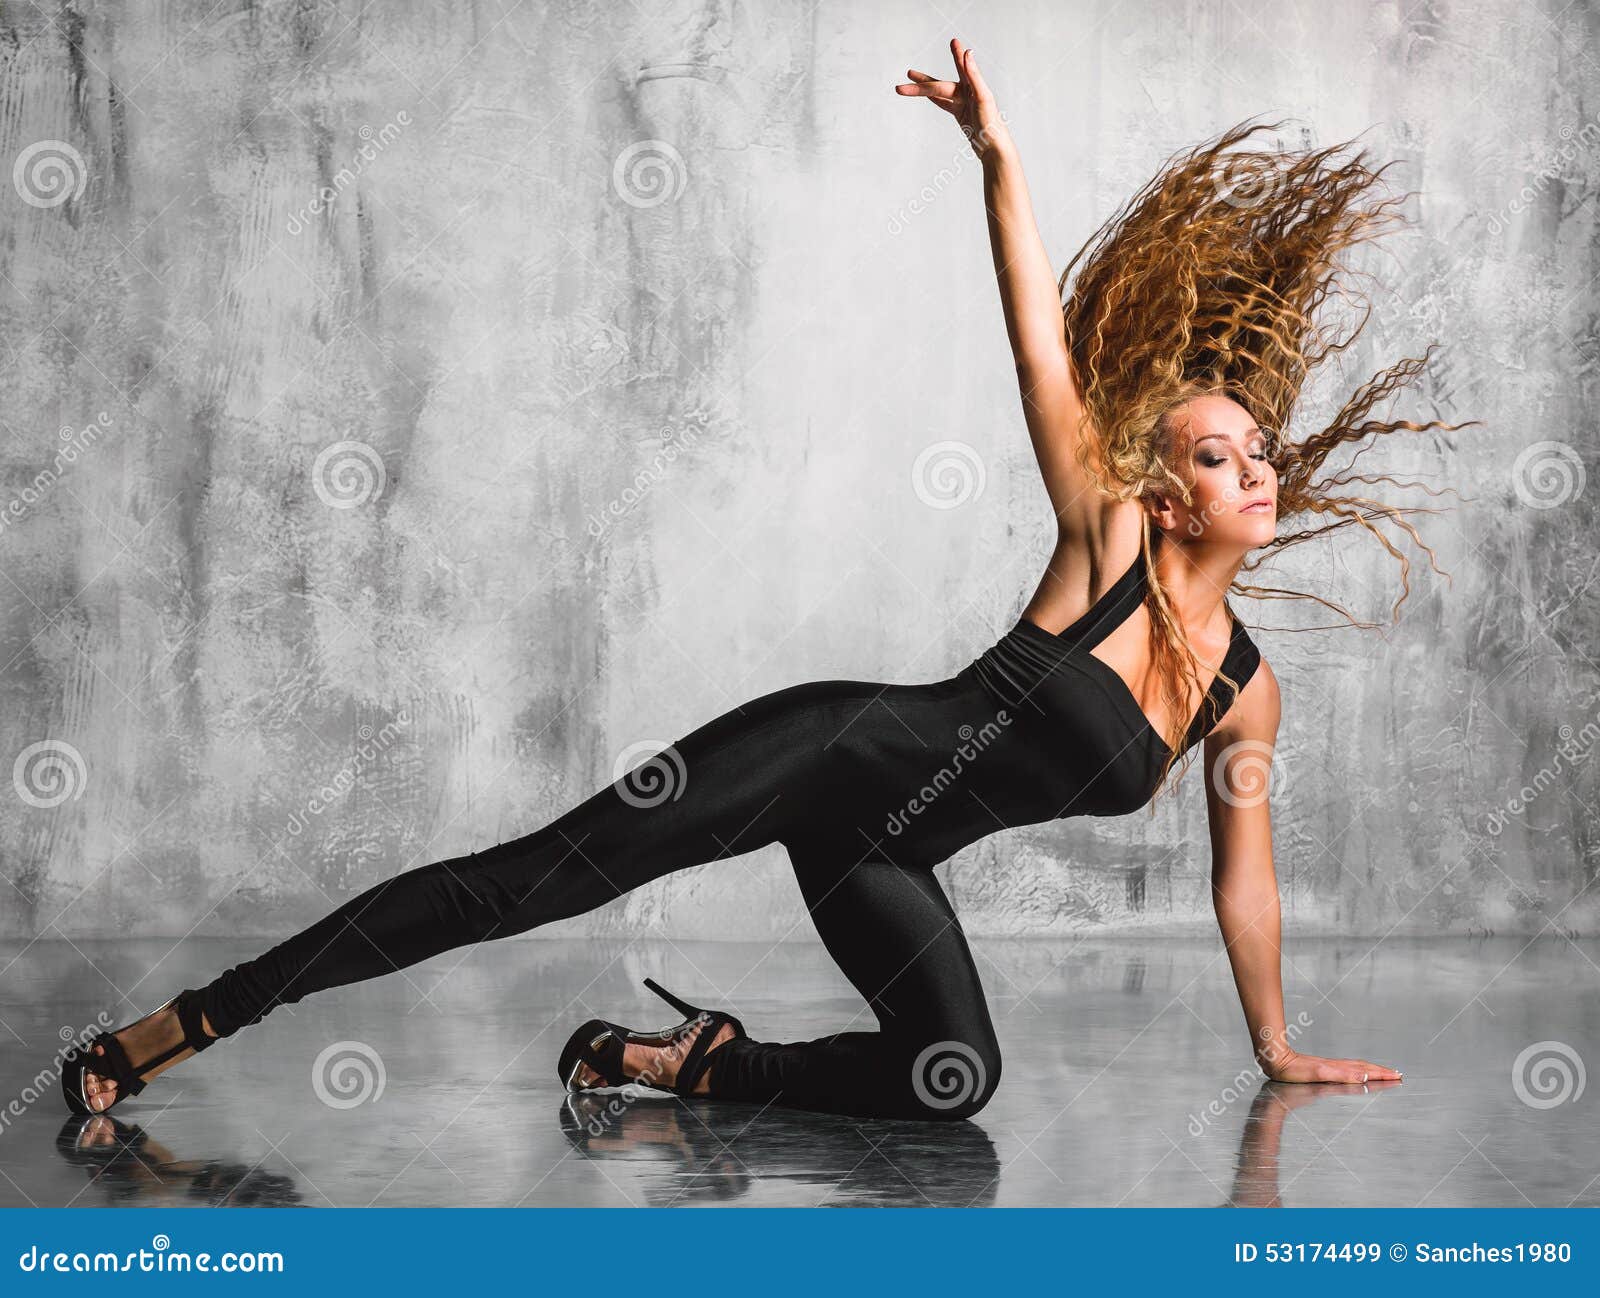 Strip Dancer Stock Image Image Of Adult Human Strip 53174499 